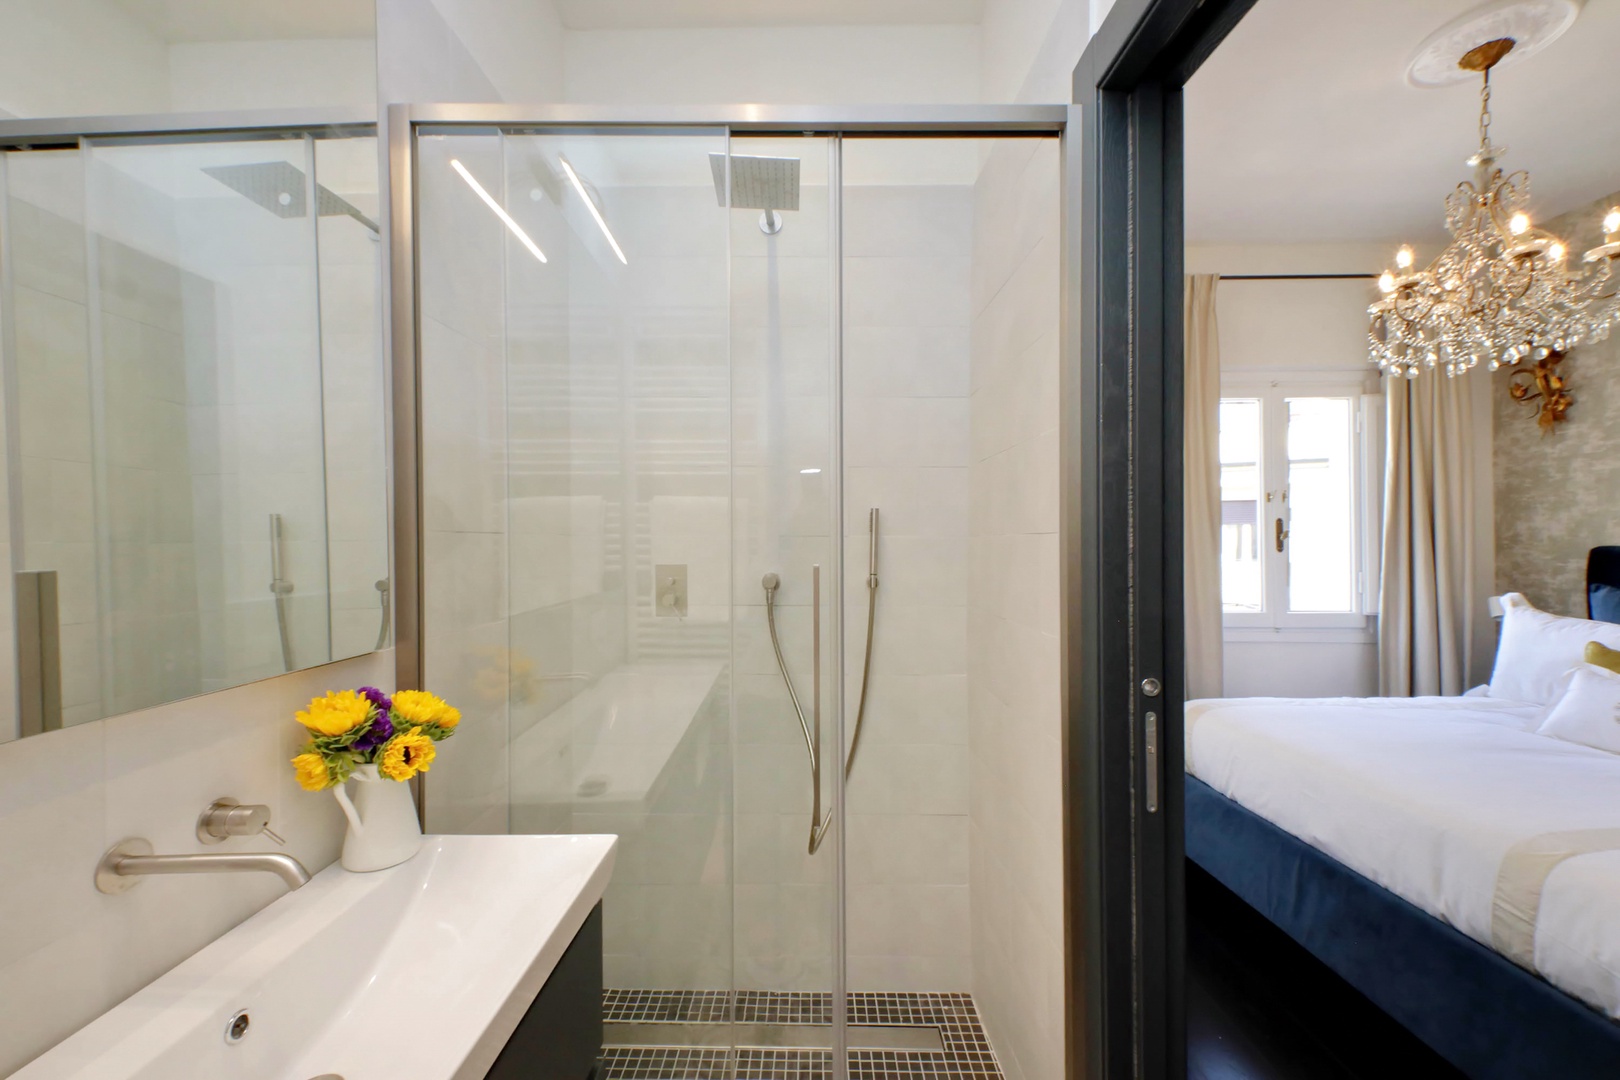 Bathroom 1 is en suite with a large shower